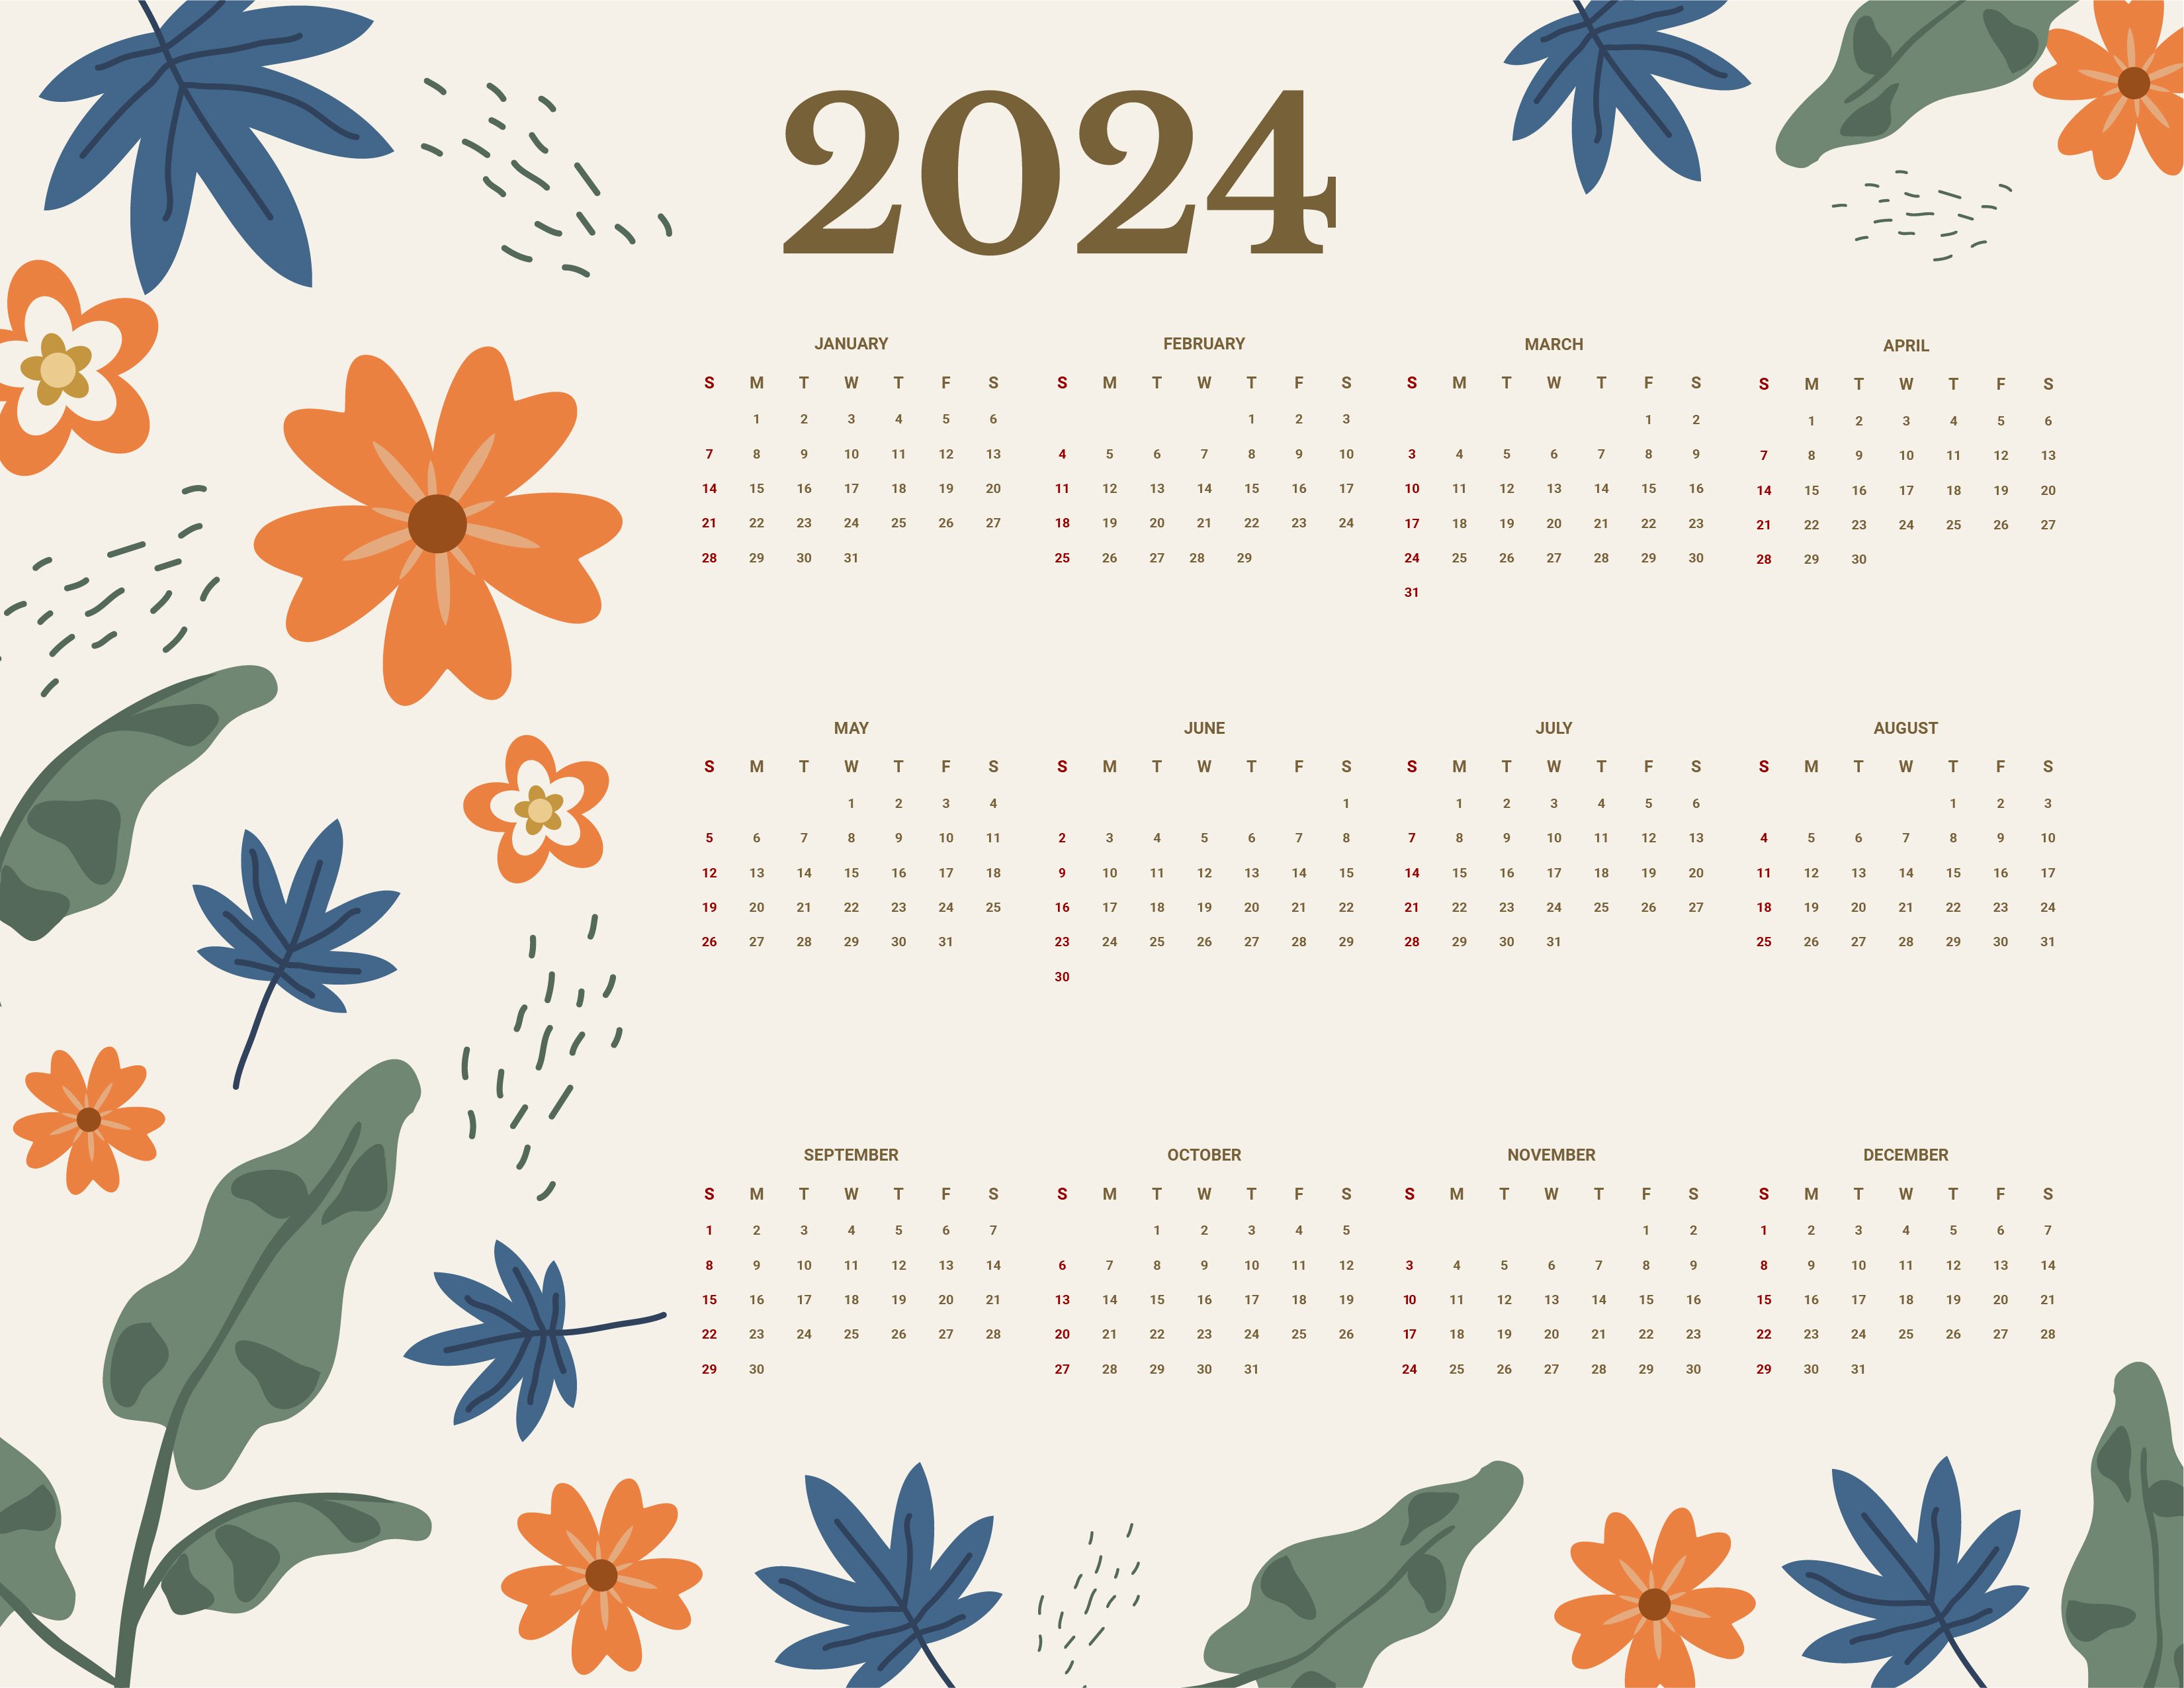 Floral Year 2024 Calendar Template 01 